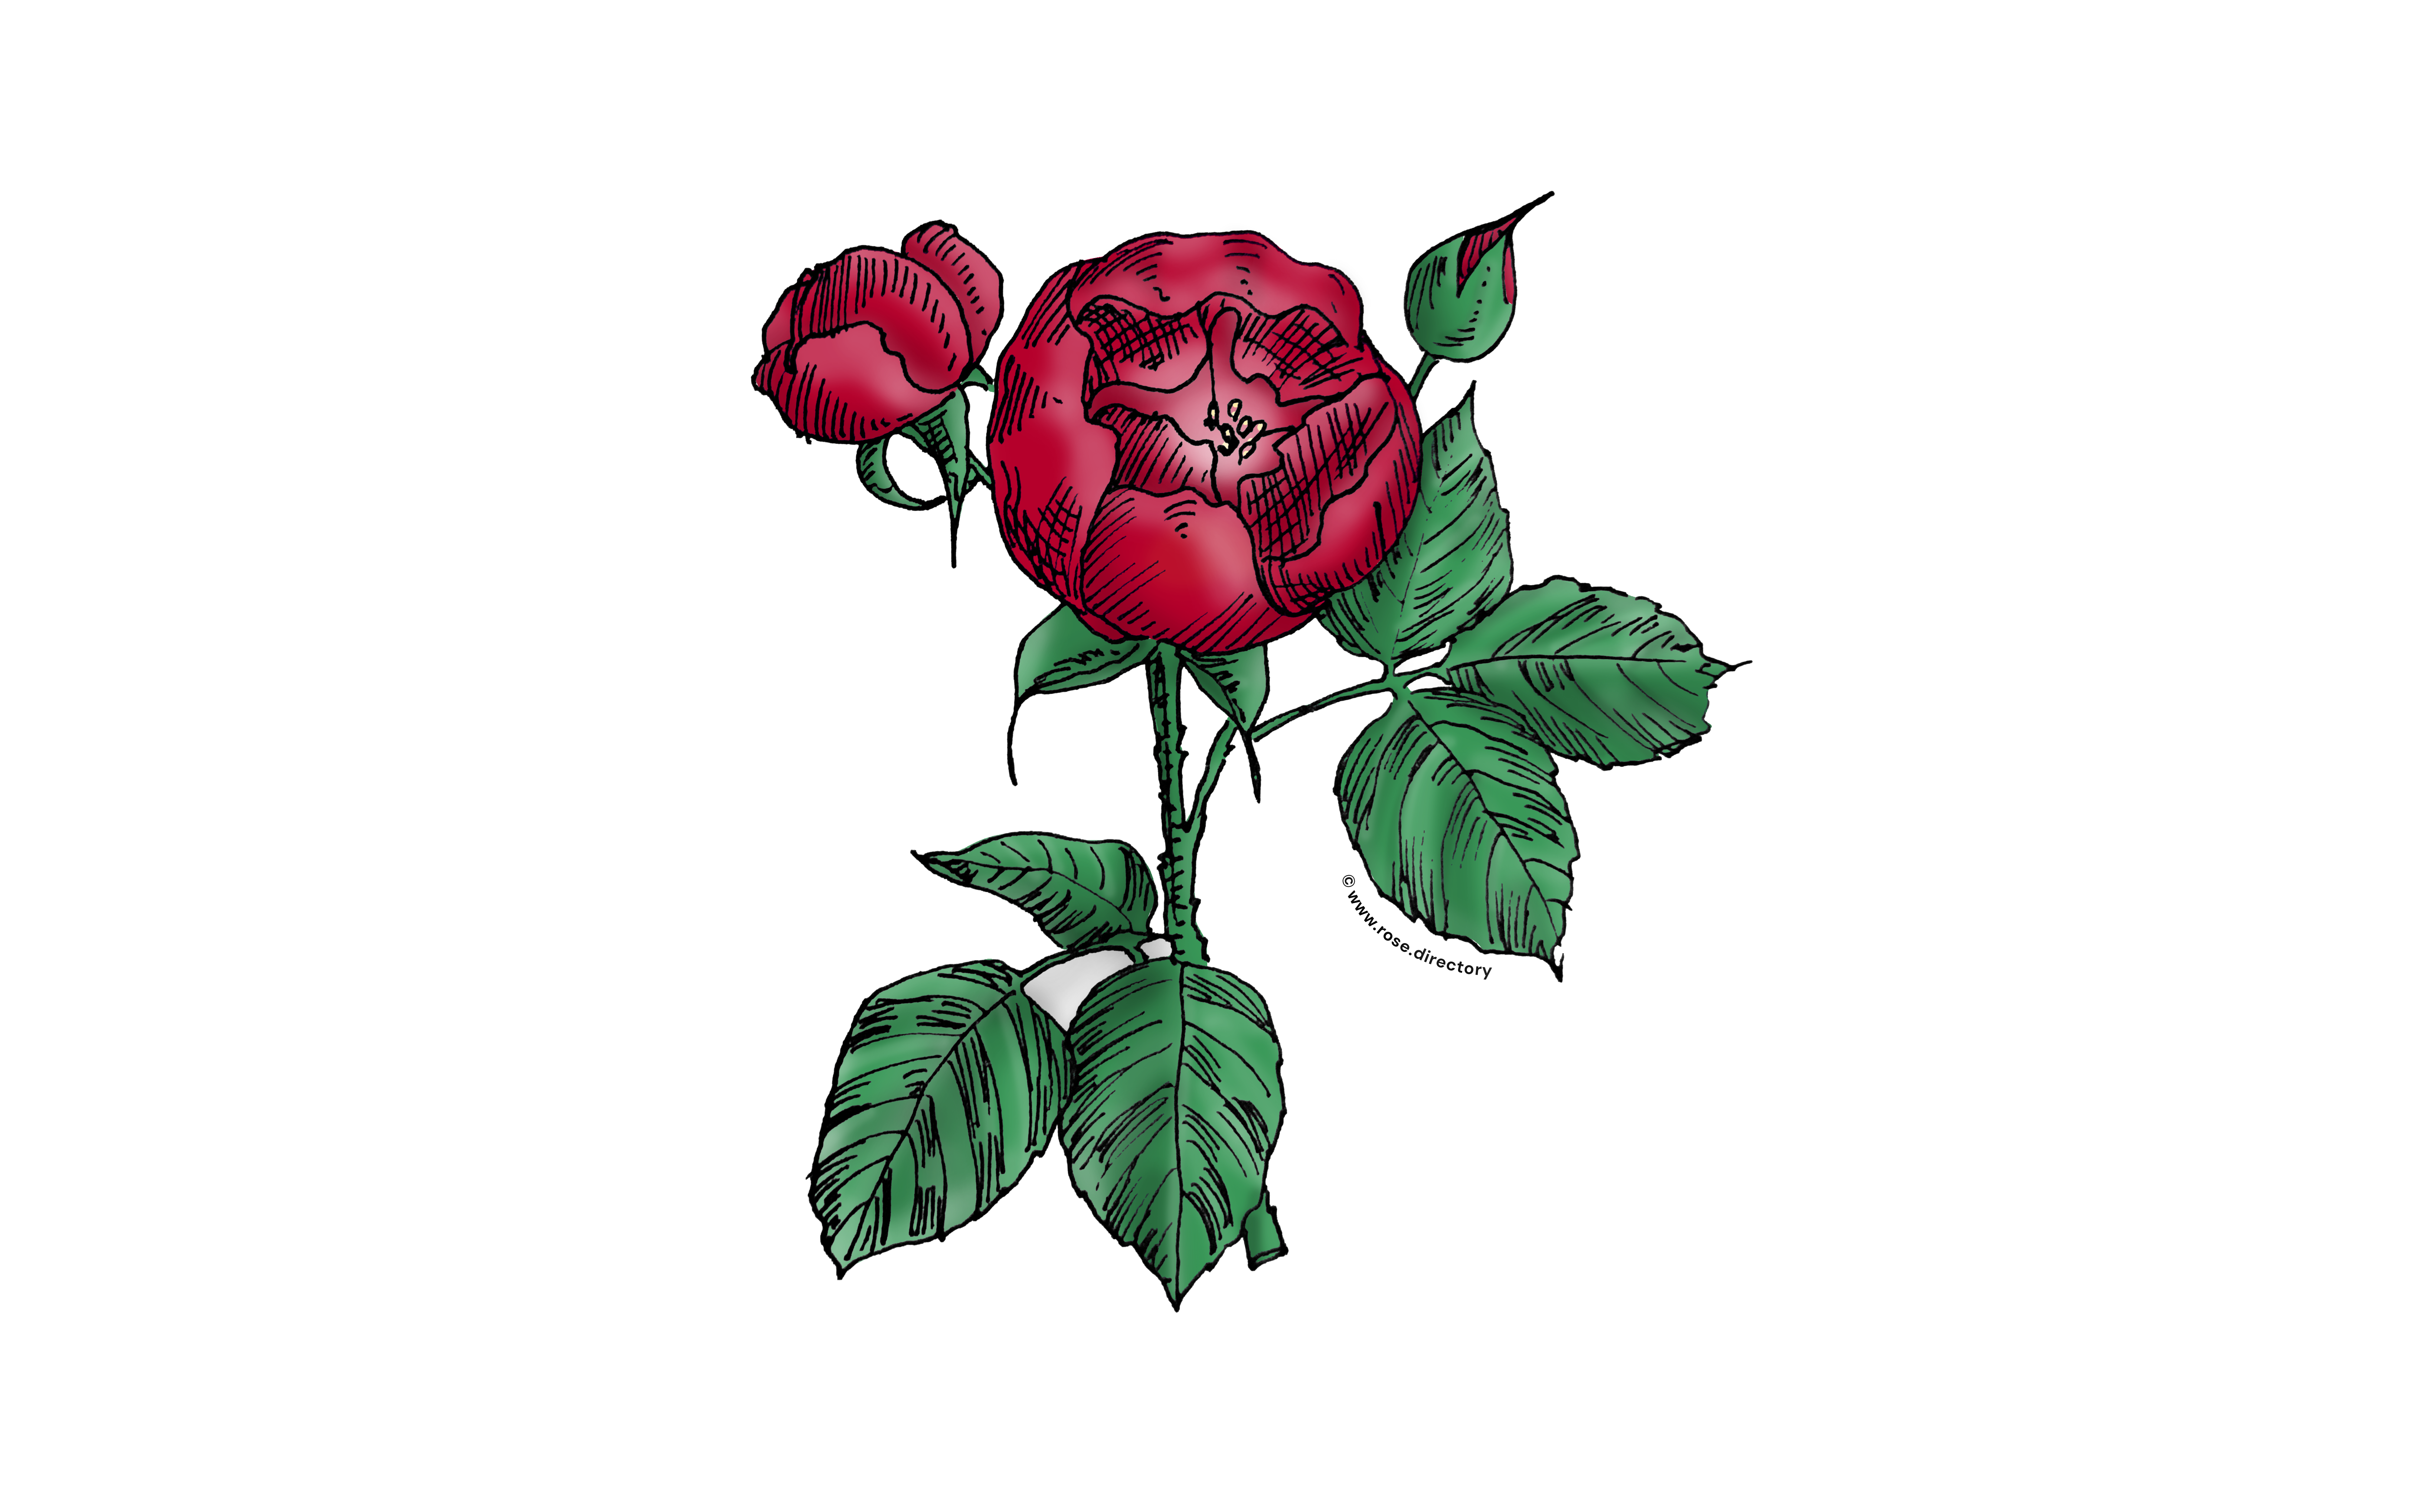 Dark Red Globular Rose Bloom Semi-Double 8-15 Petals In 2 Rows